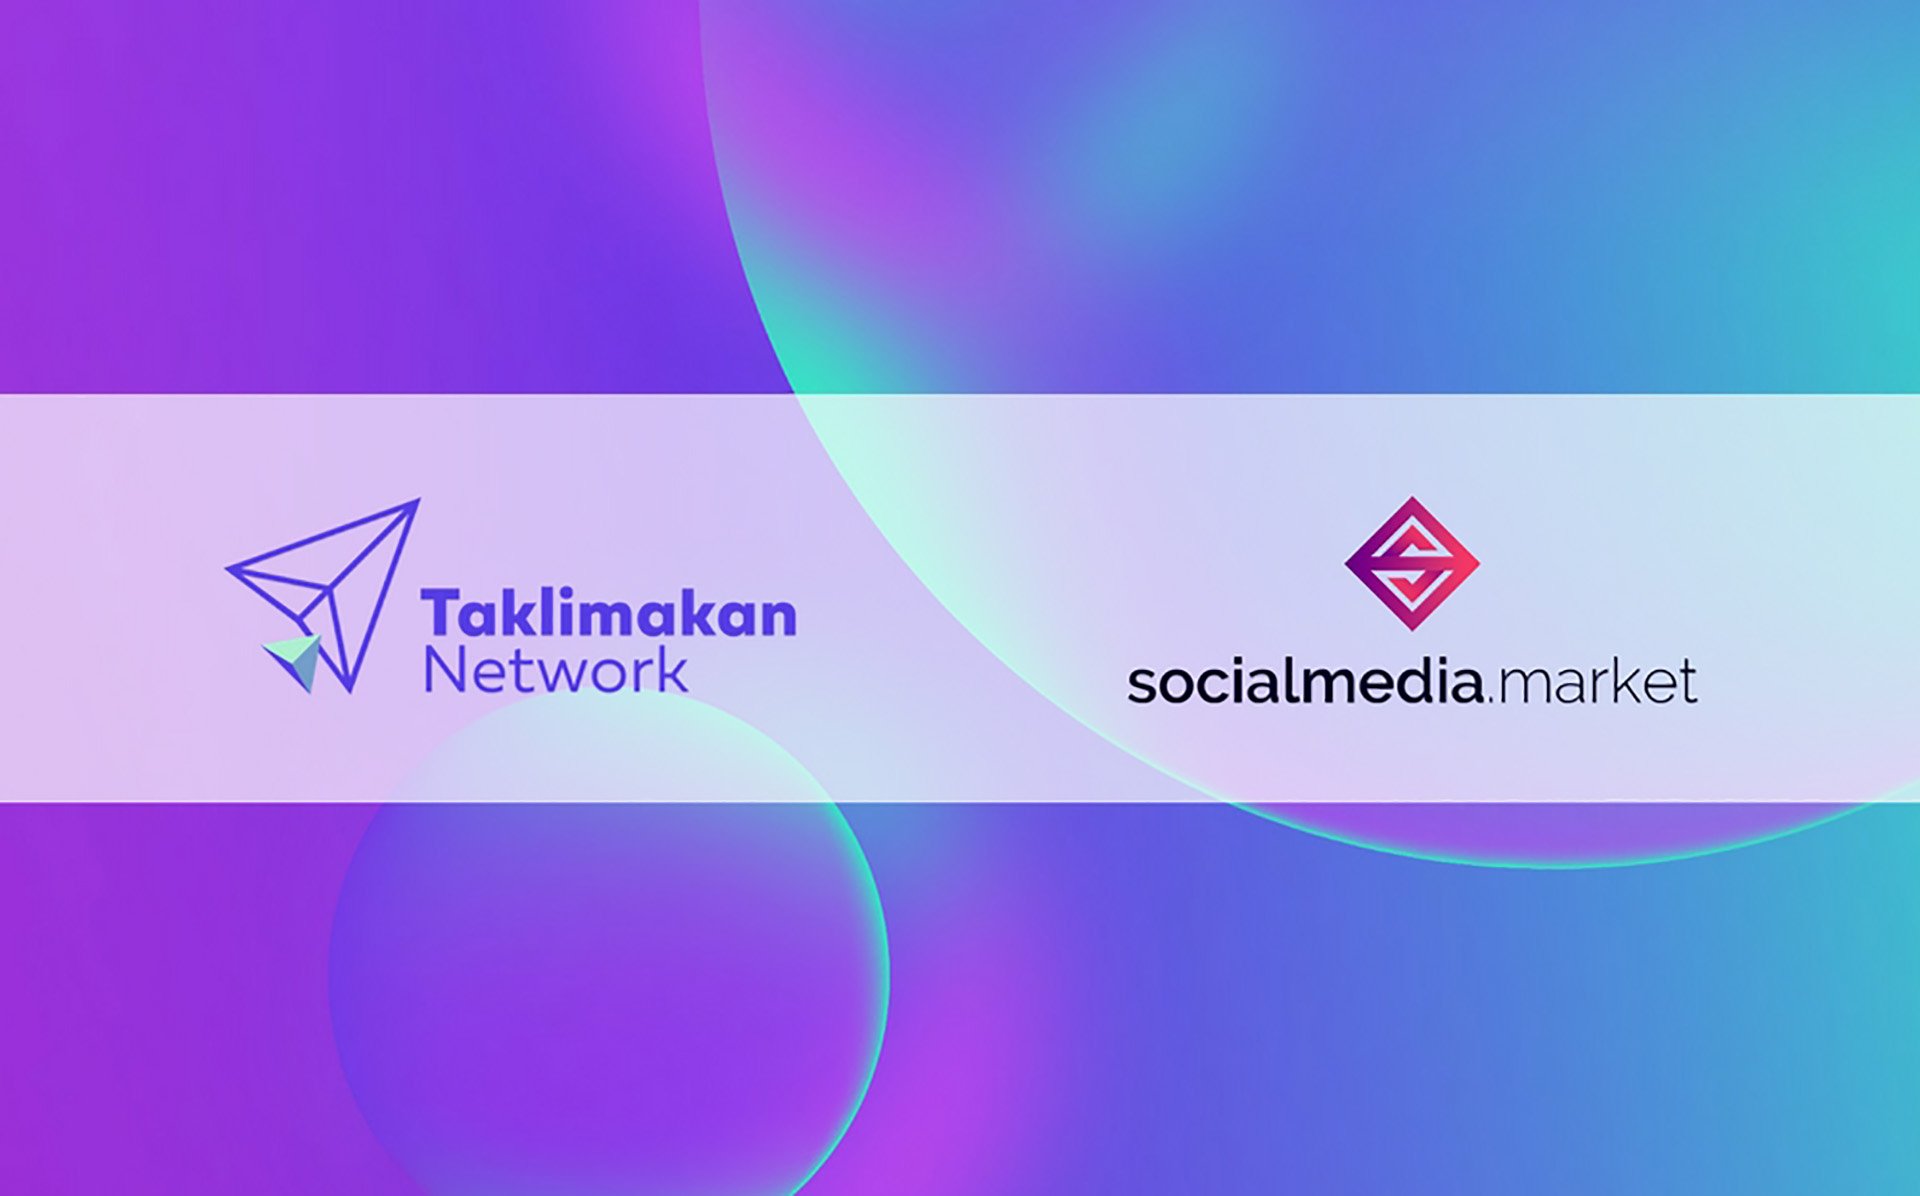 Taklimakan Network and SocialMedia.Market Form Partnership